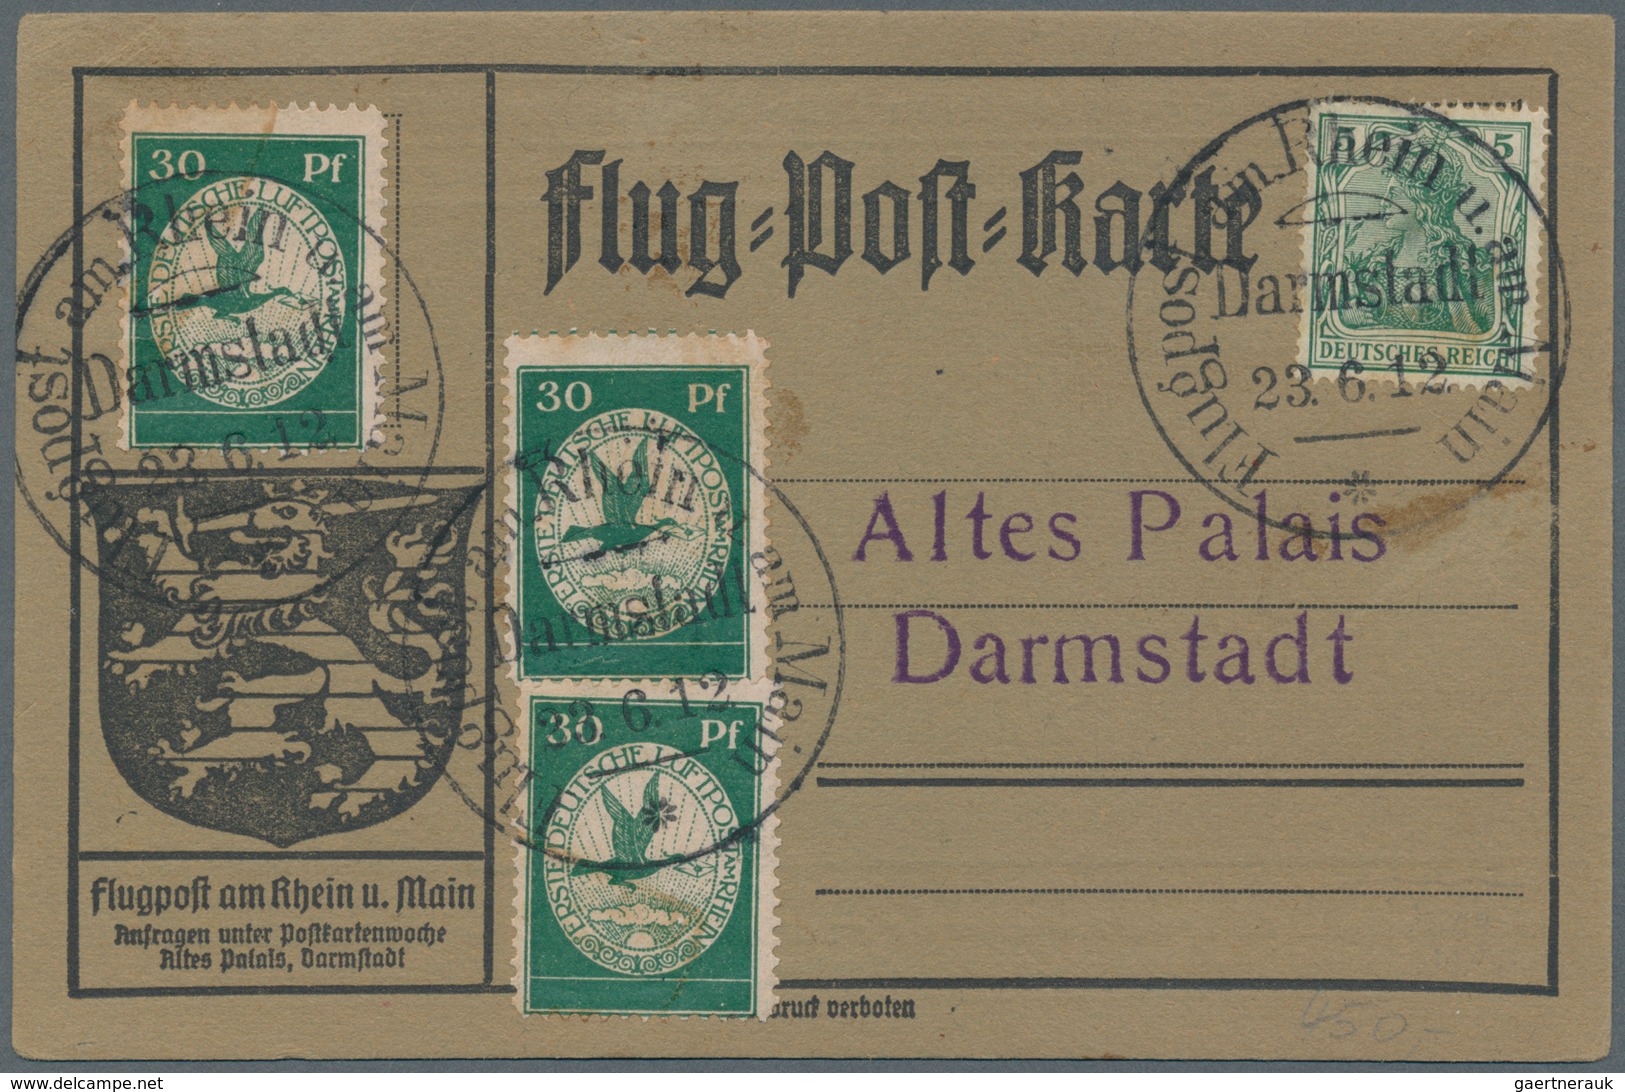 Zeppelinpost Deutschland: 1912/1945 (ca): Posten mit über 90 teils sehr raren Zeppelin-Belegen, indi